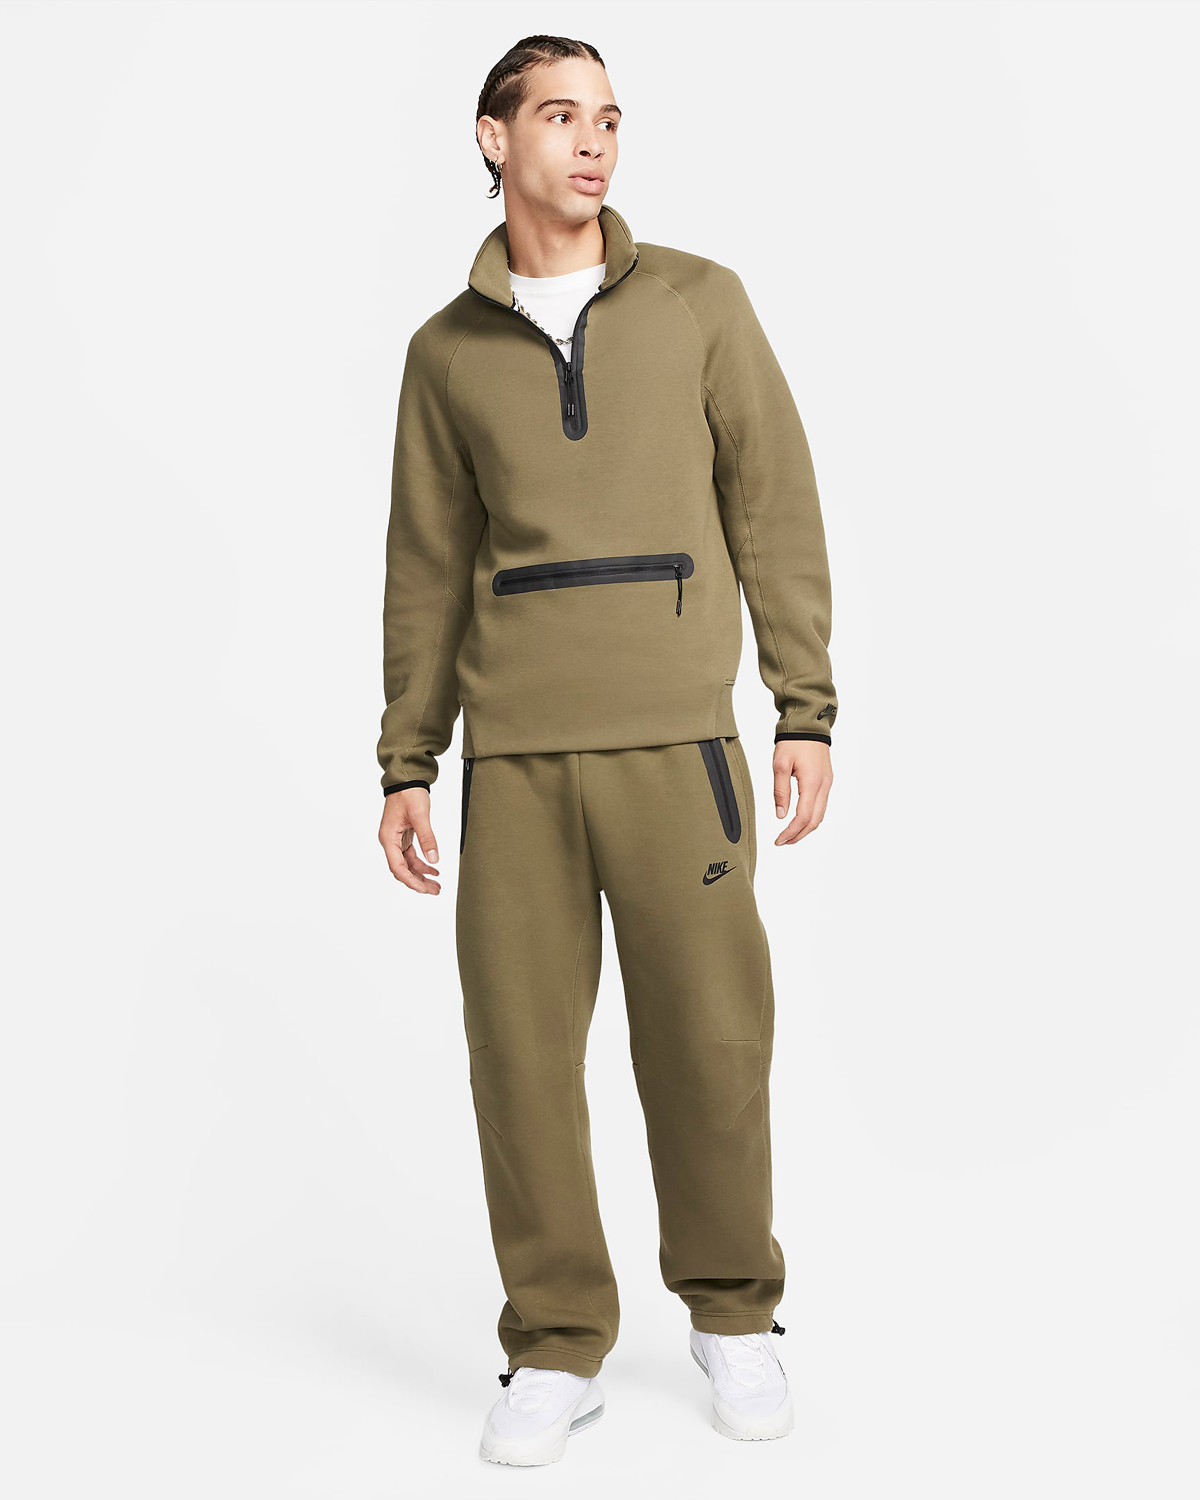 Nike-Tech-Fleece-Half-Zip-Sweatshirt-Medium-Olive-Outfit